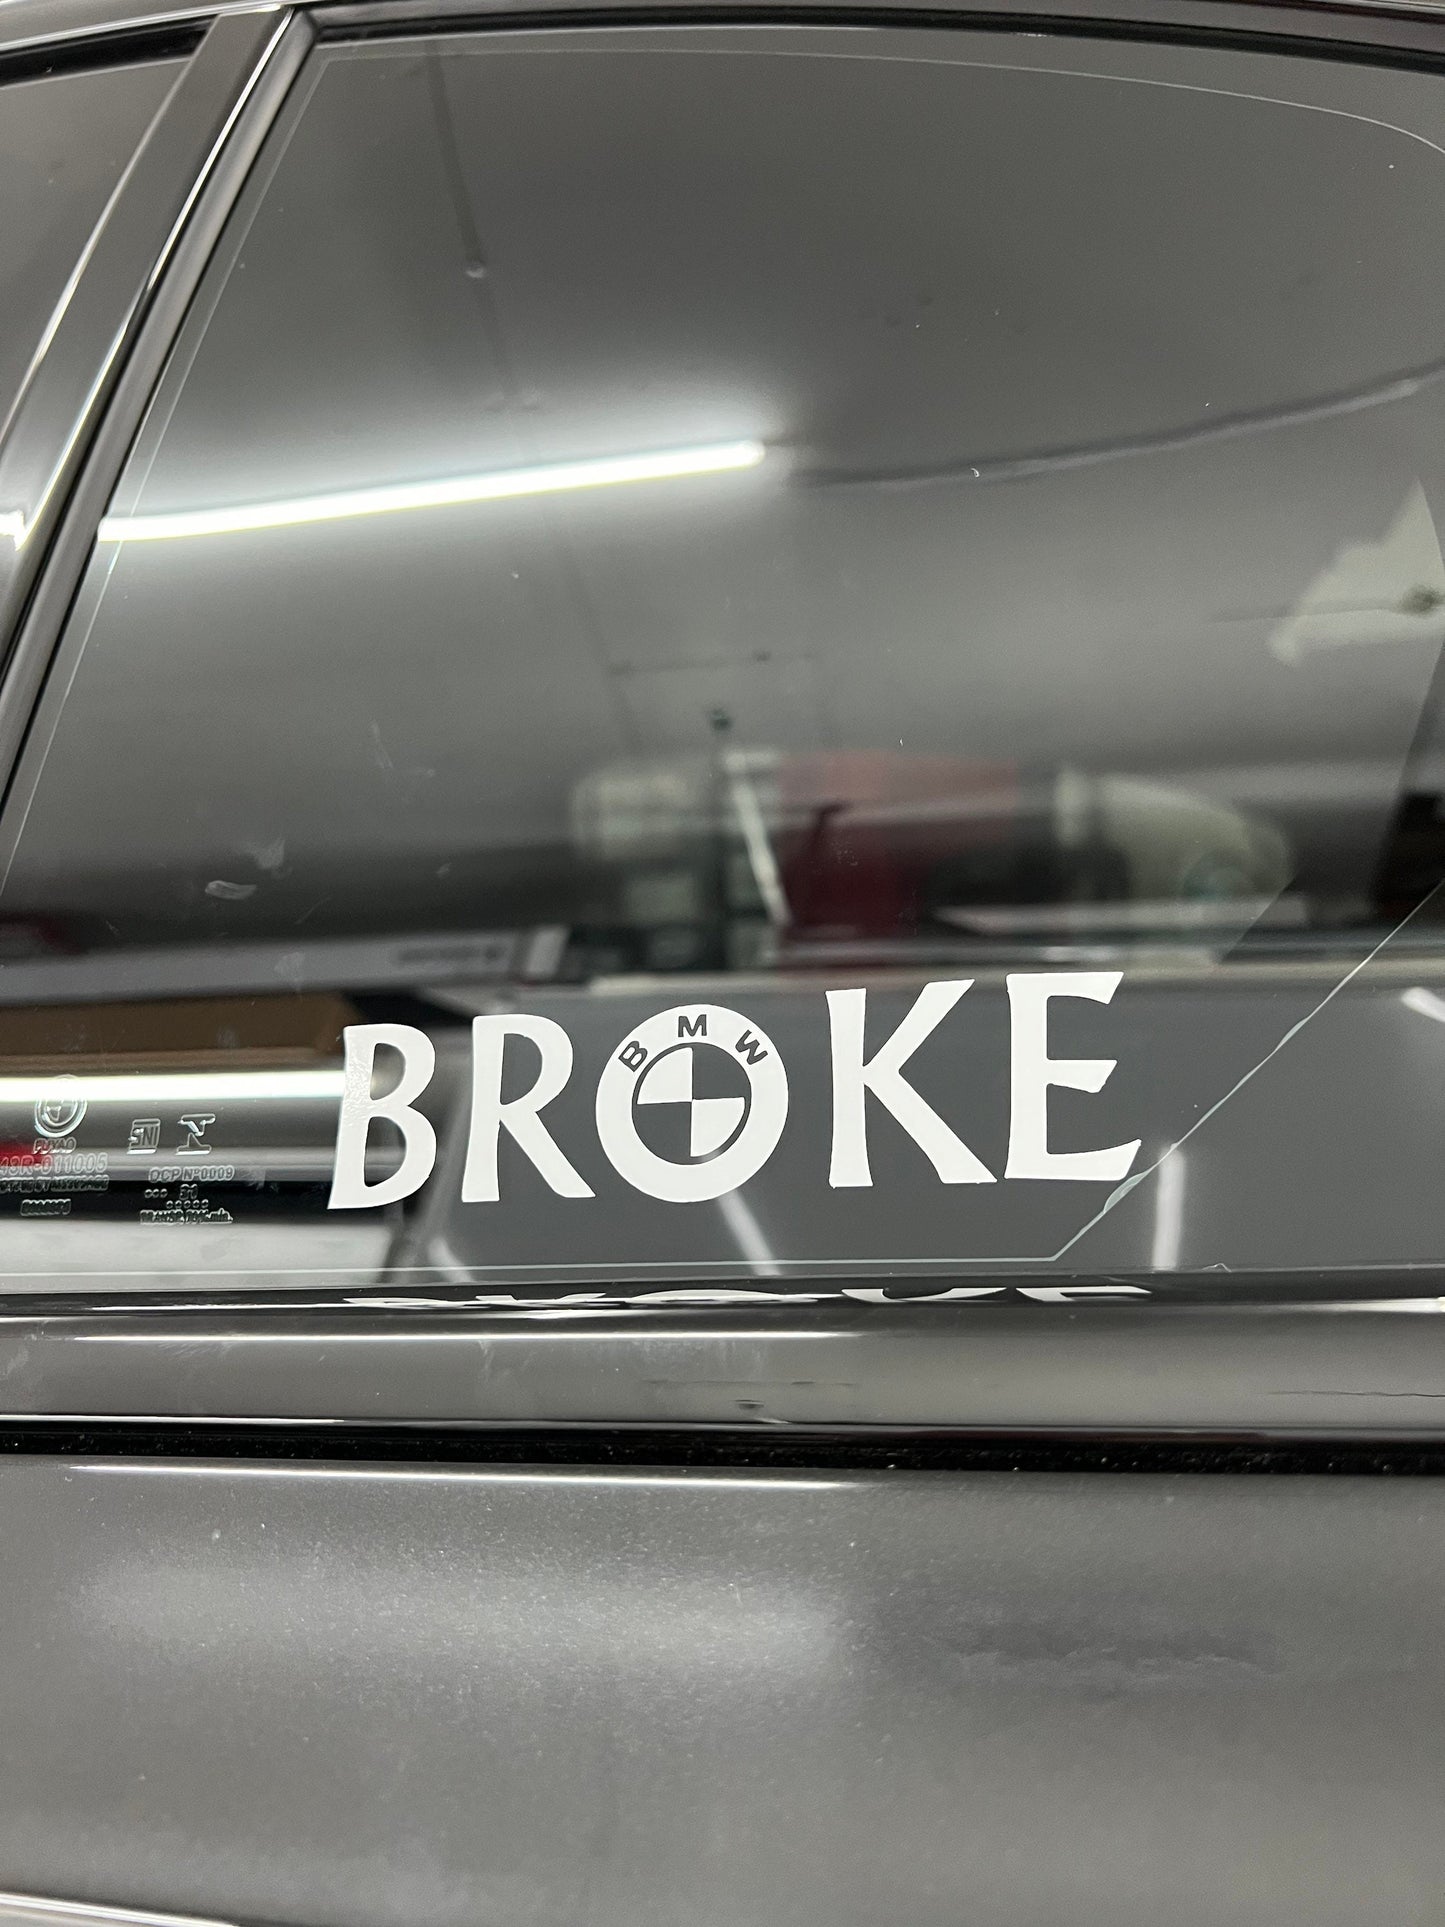 BMW BROKE Decal